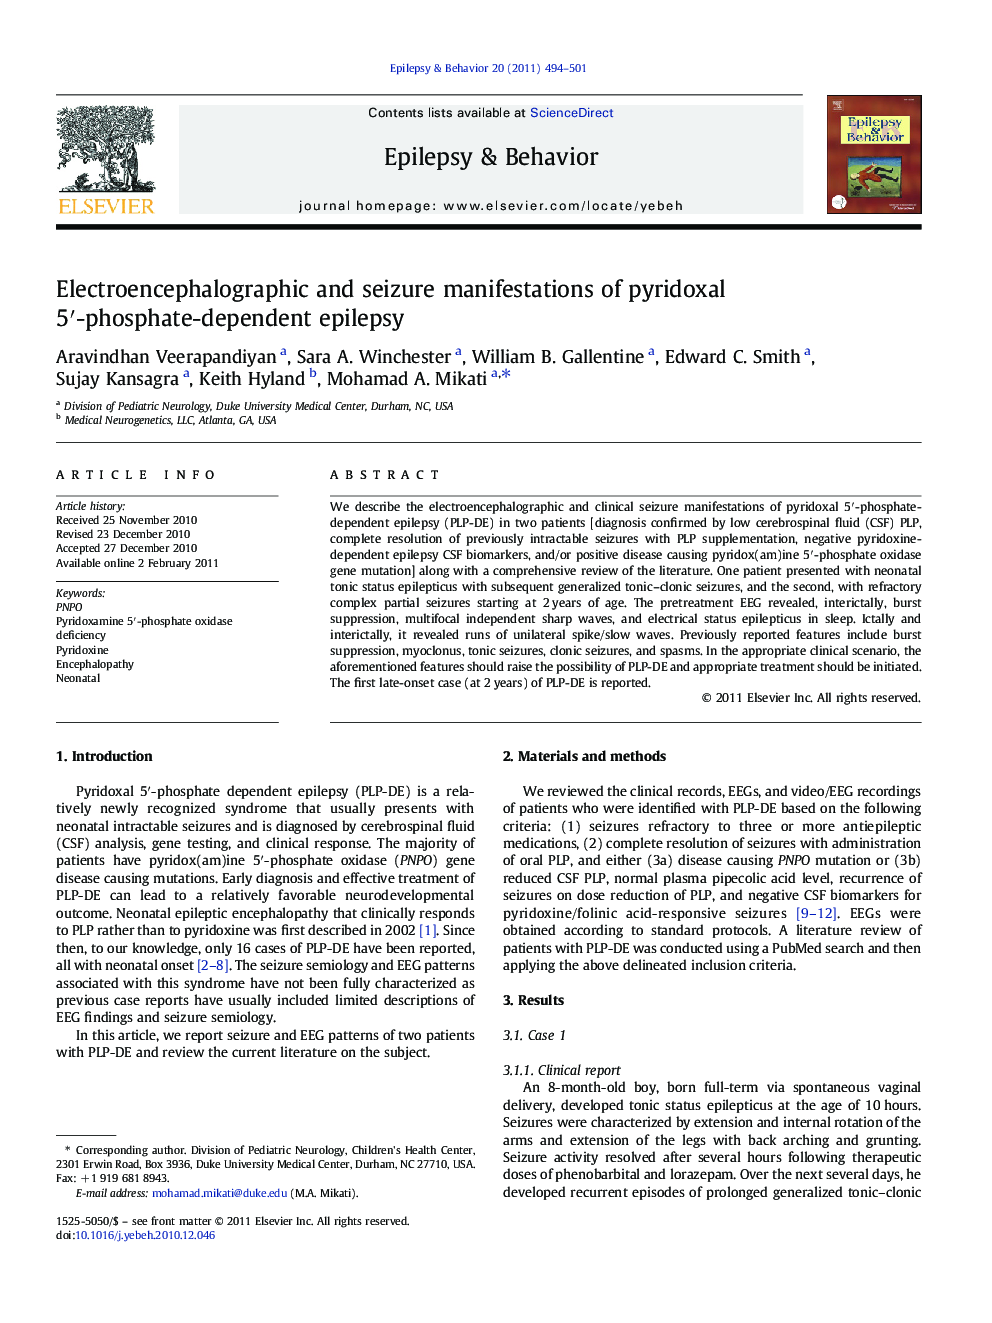 Electroencephalographic and seizure manifestations of pyridoxal 5â²-phosphate-dependent epilepsy